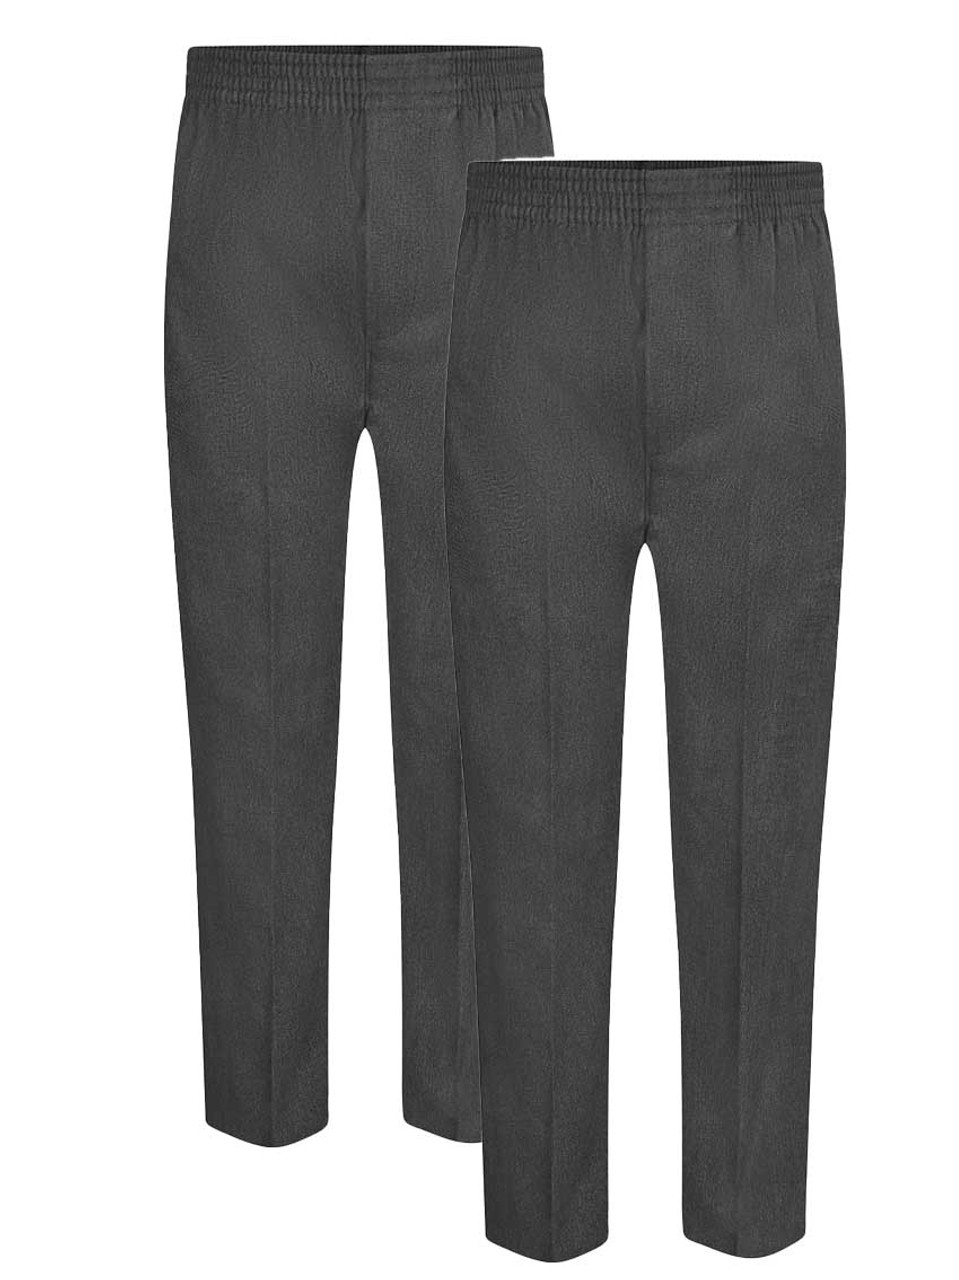 Boys Full Elastic Pull up School Trousers Grey 49983.1624281922